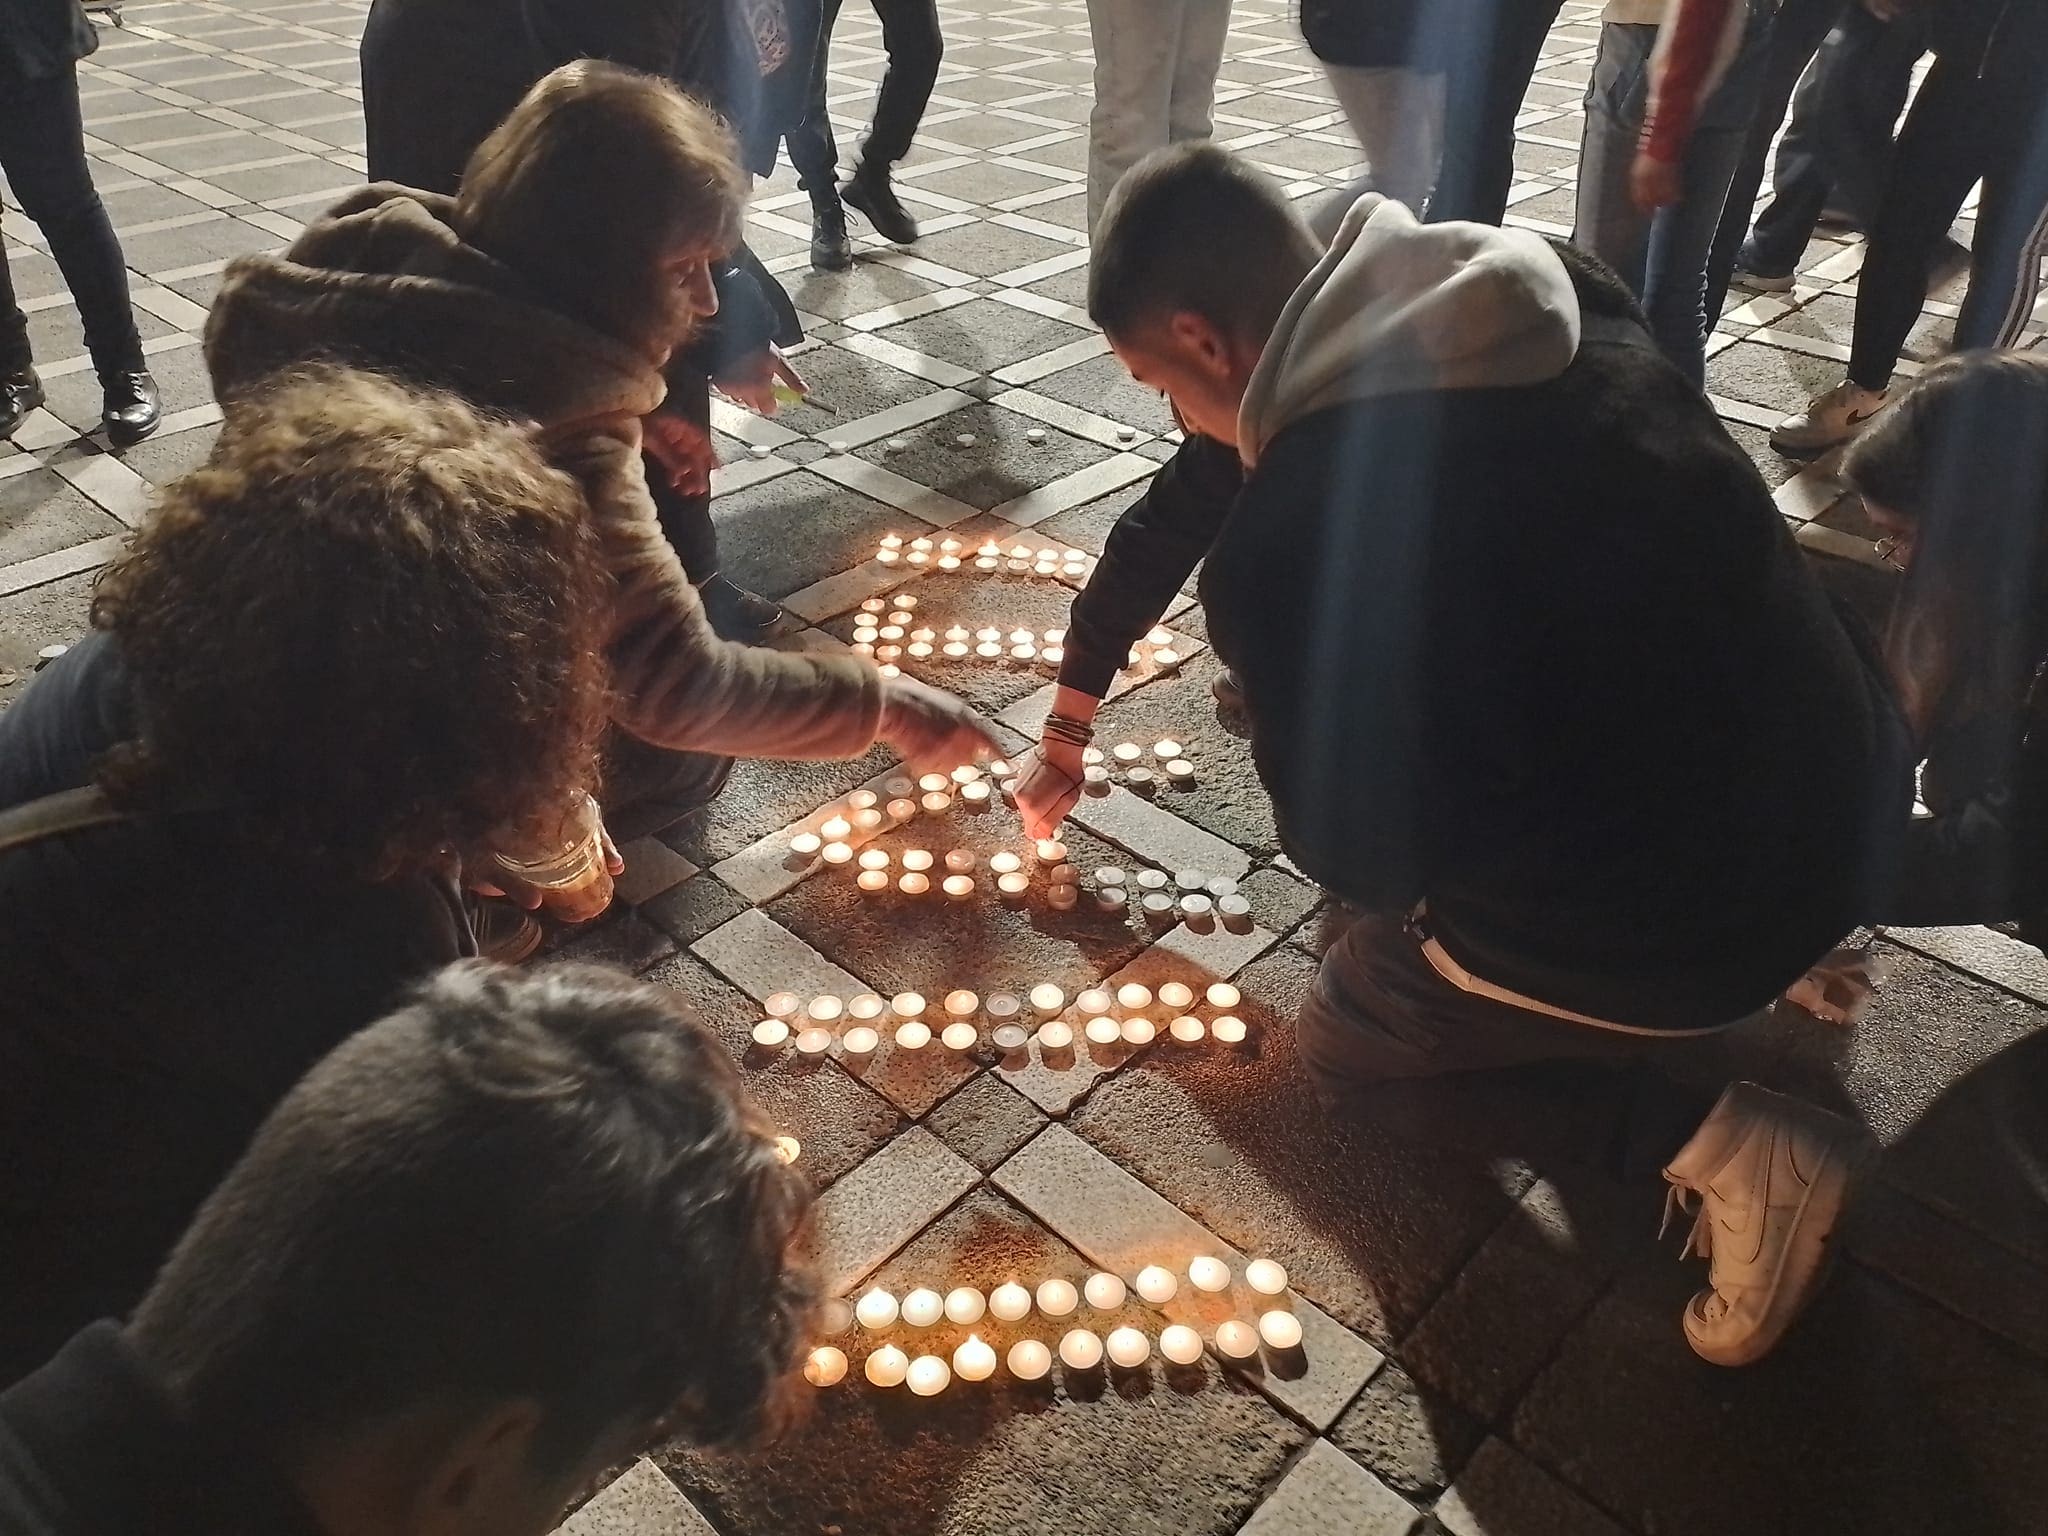 Eordaialive.com - Τα Νέα της Πτολεμαΐδας, Εορδαίας, Κοζάνης Πτολεμαΐδα: Σιωπηρή διαμαρτυρία στη μνήμη των θυμάτων στα Τέμπη (εικόνες)